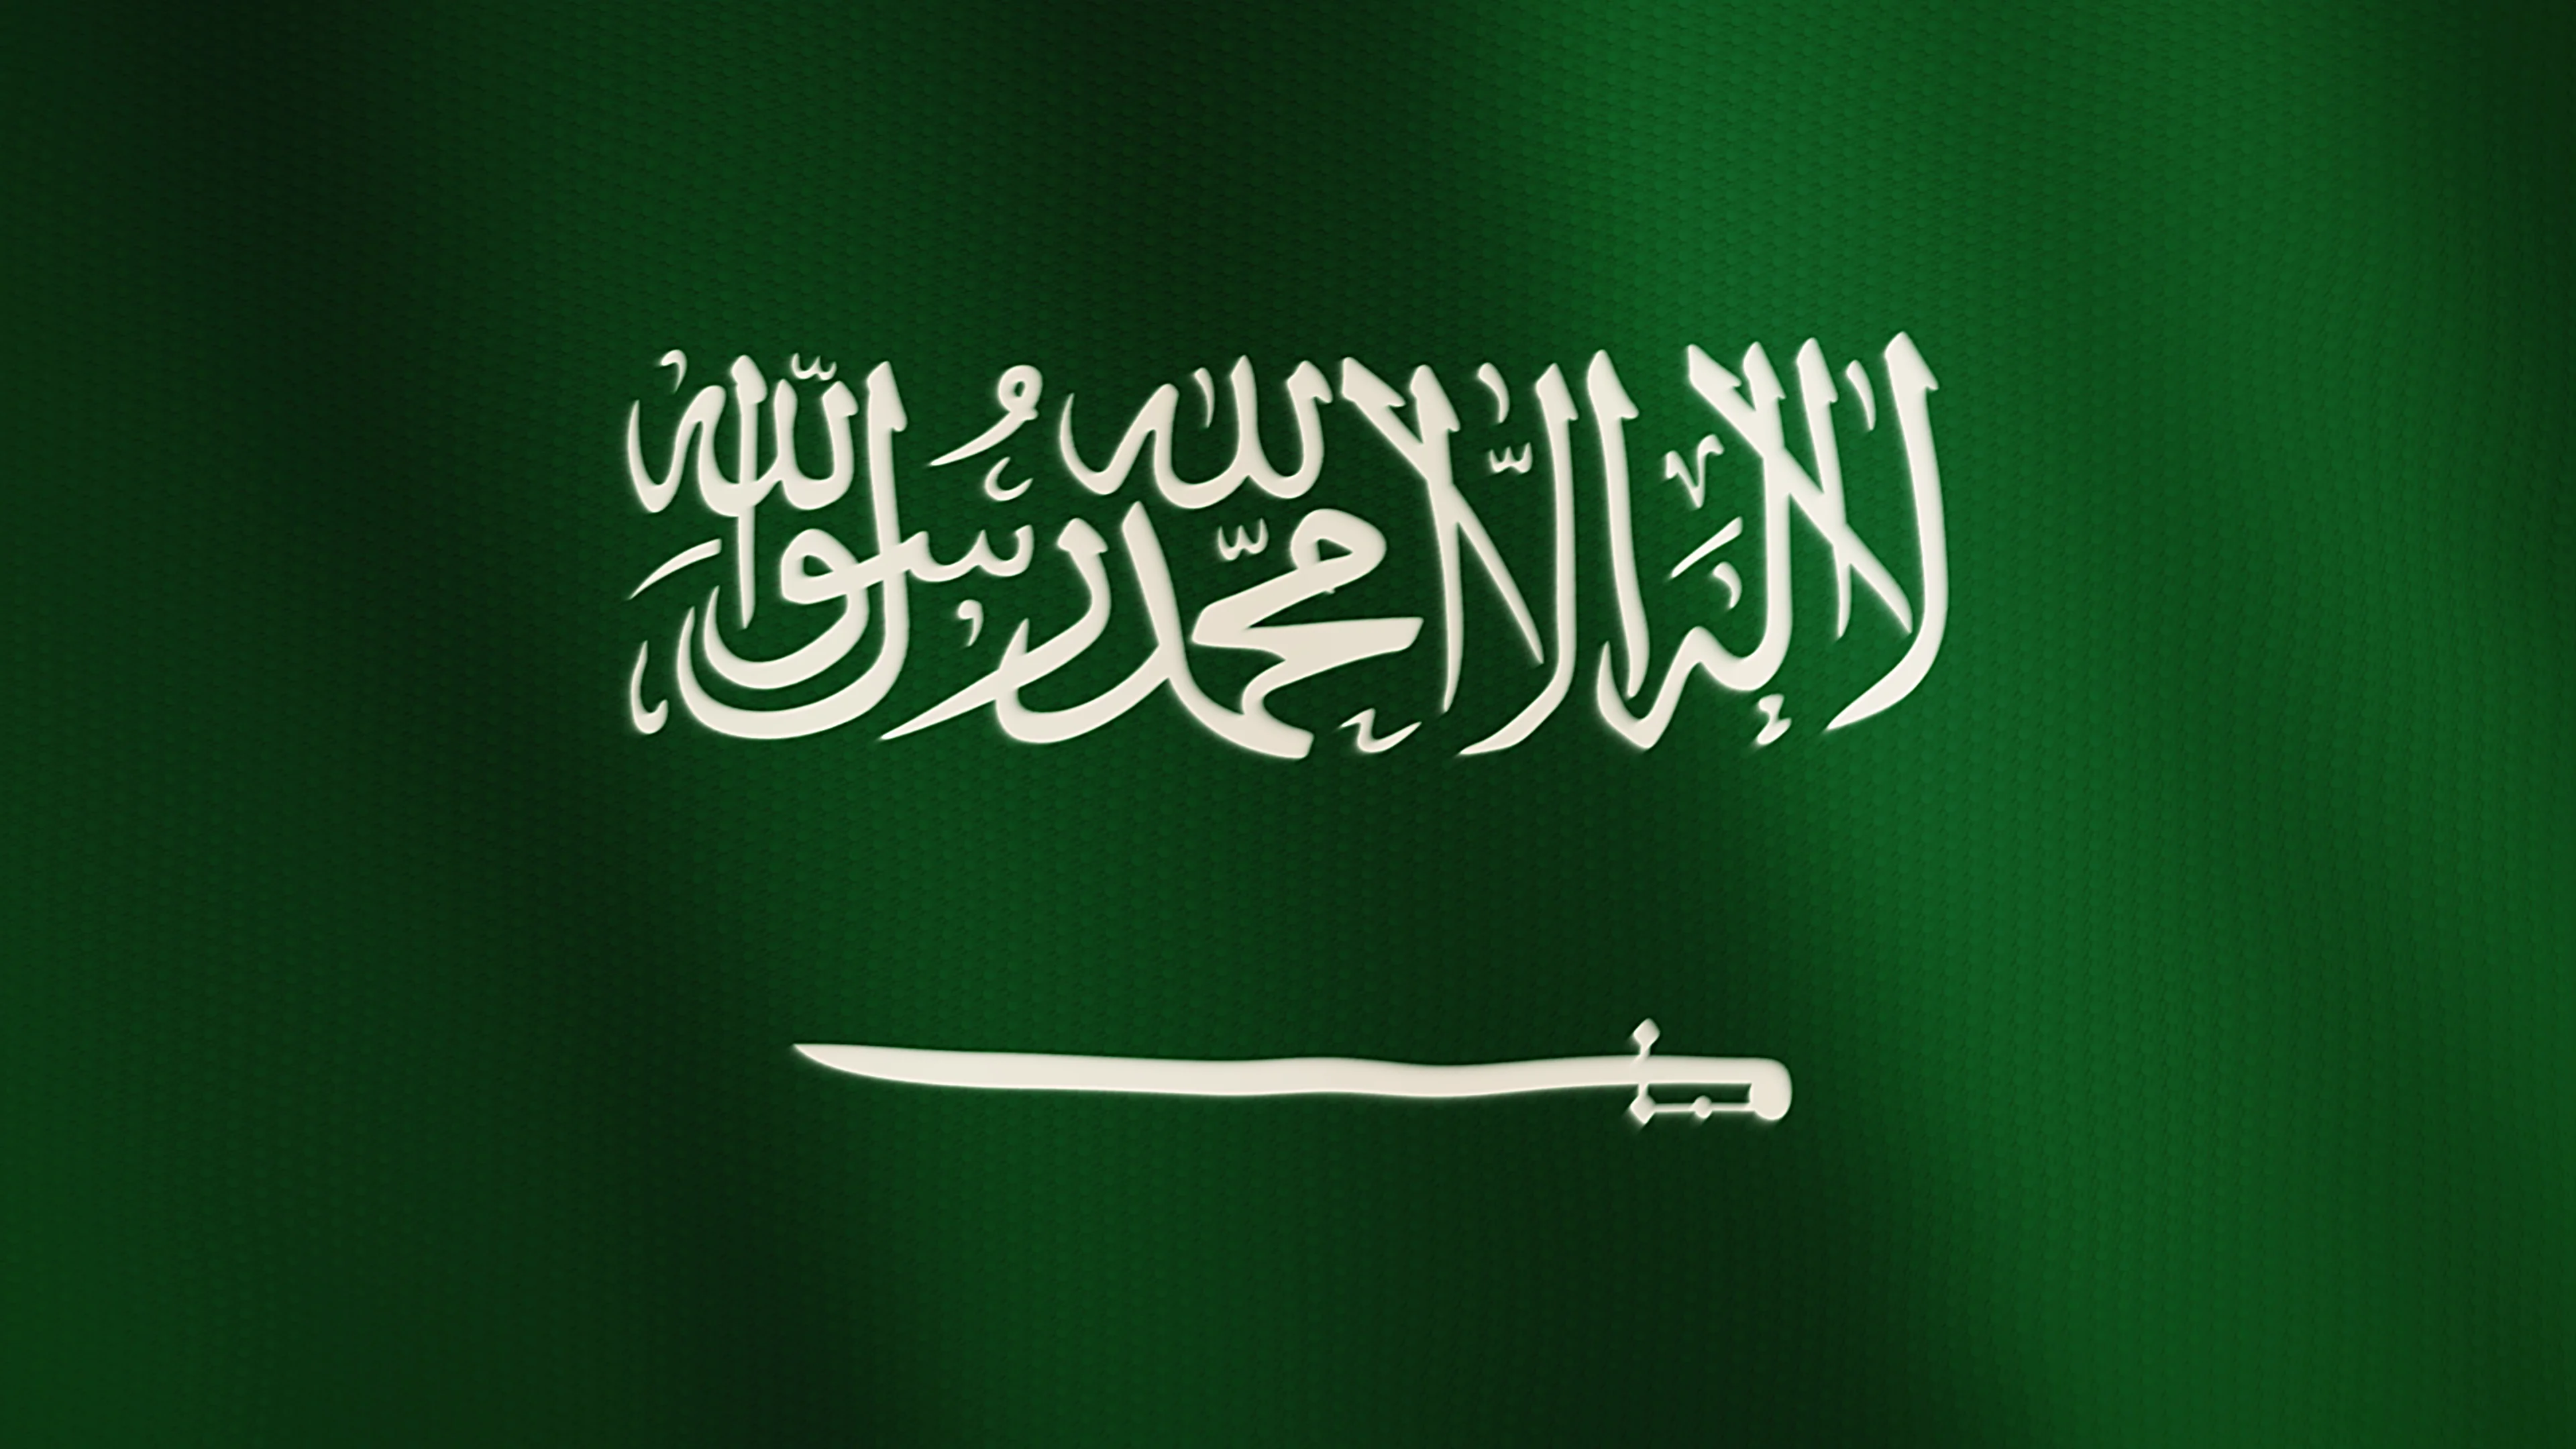 1019 Год Аравия флаг